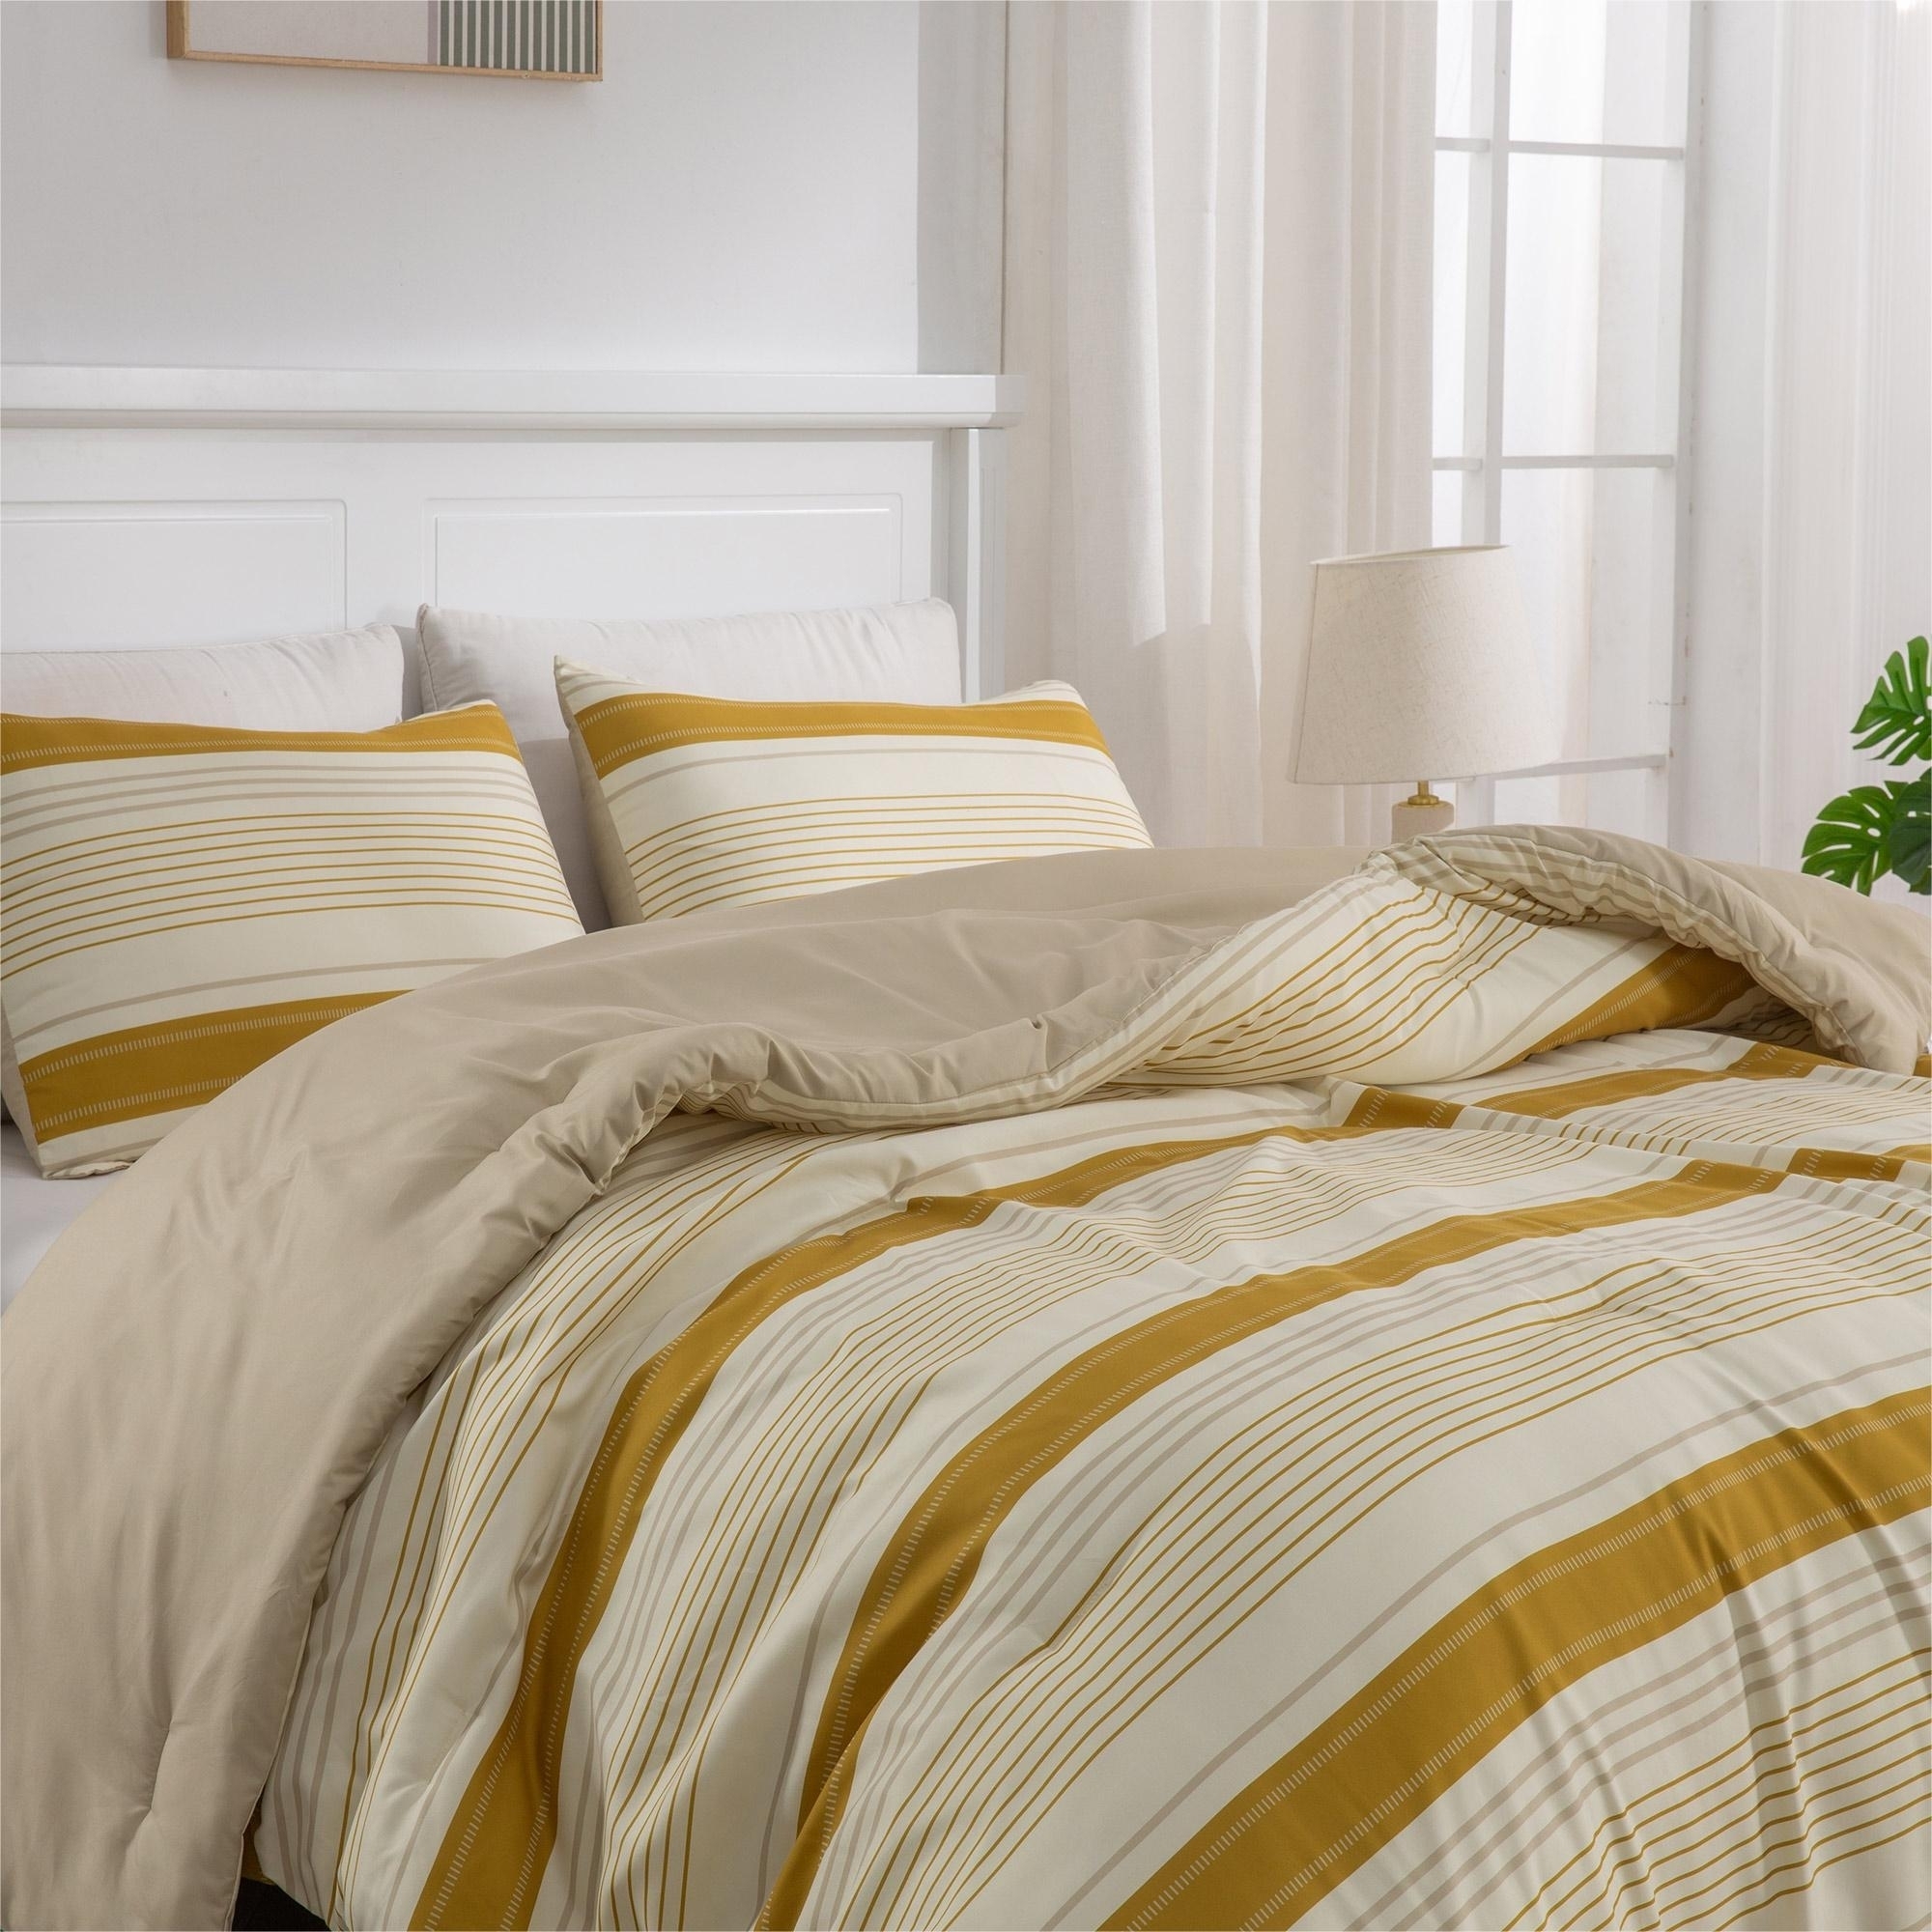 Printed Stripe Microfiber Comforter Set - All-Season Warmth, Yellow - Full/Queen